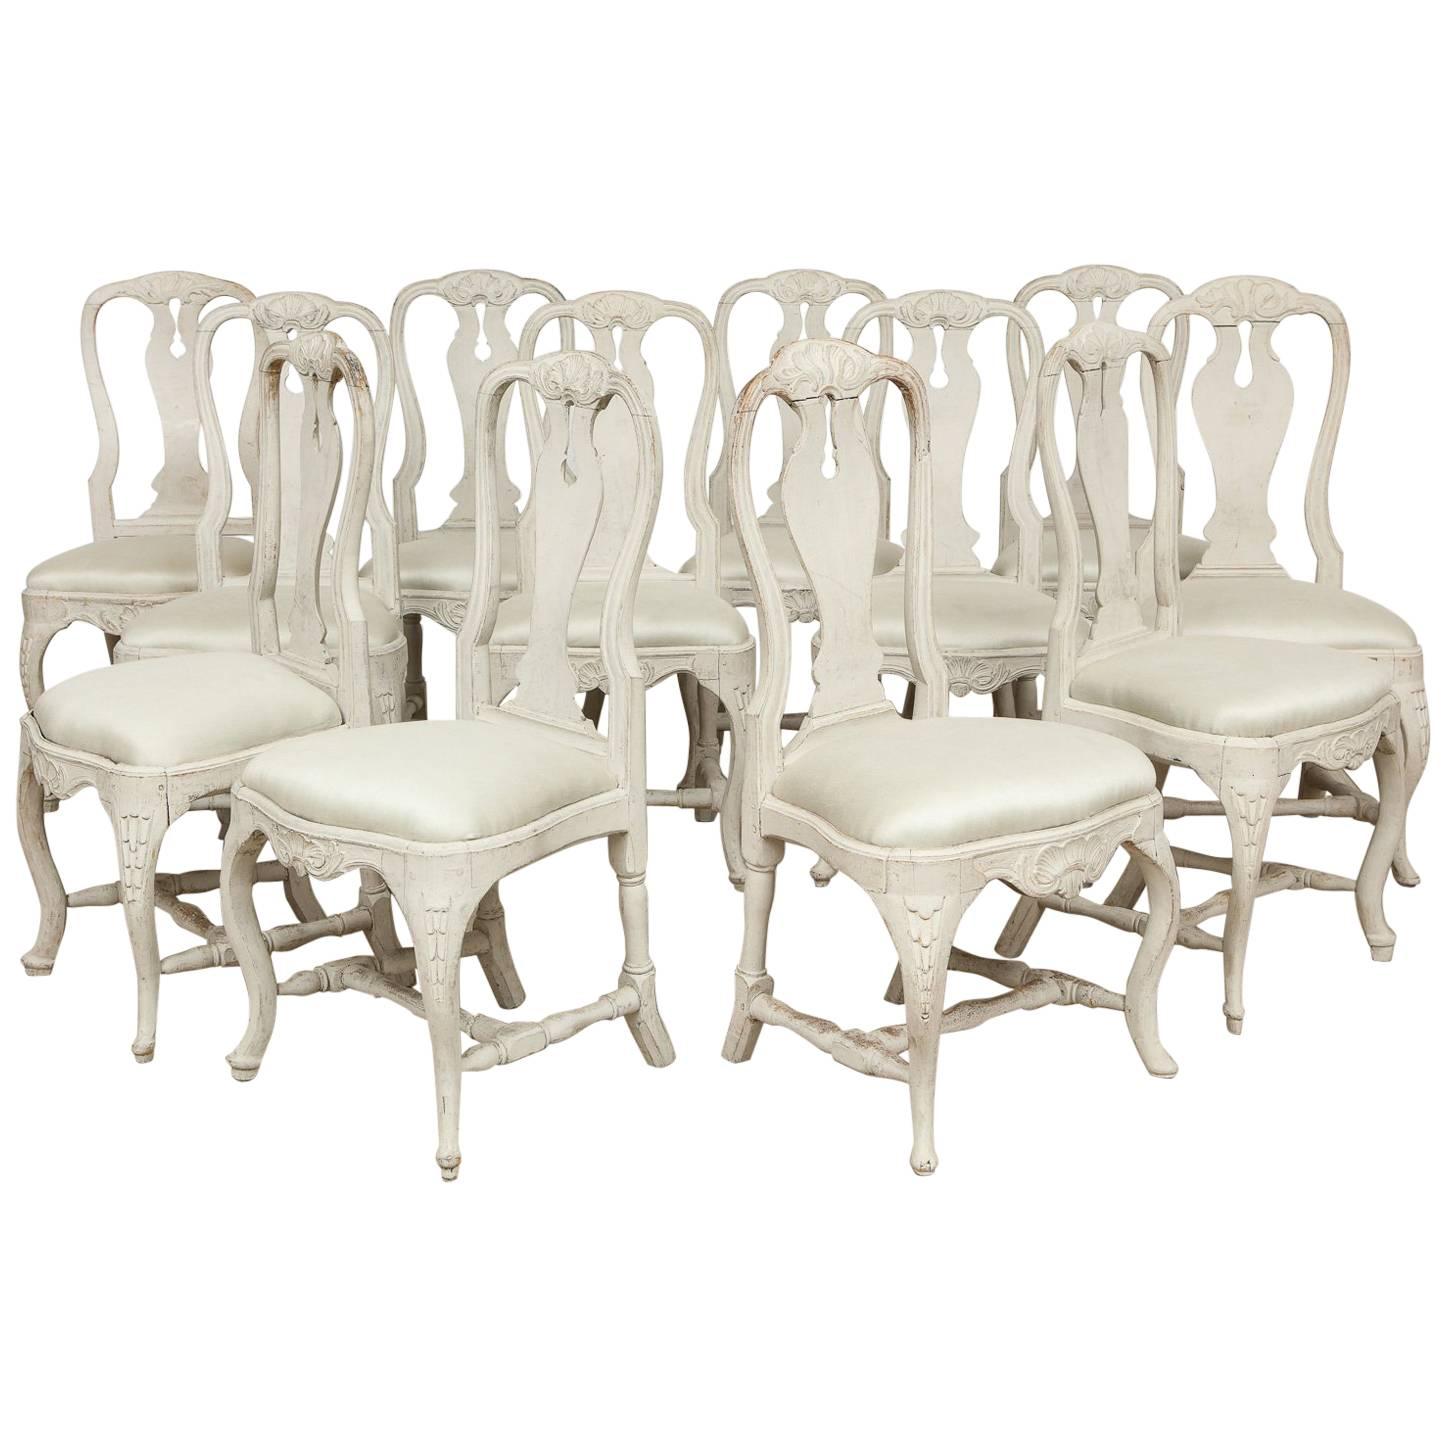 Swedish Rococo Dining Chairs, Set of 12, circa 1765